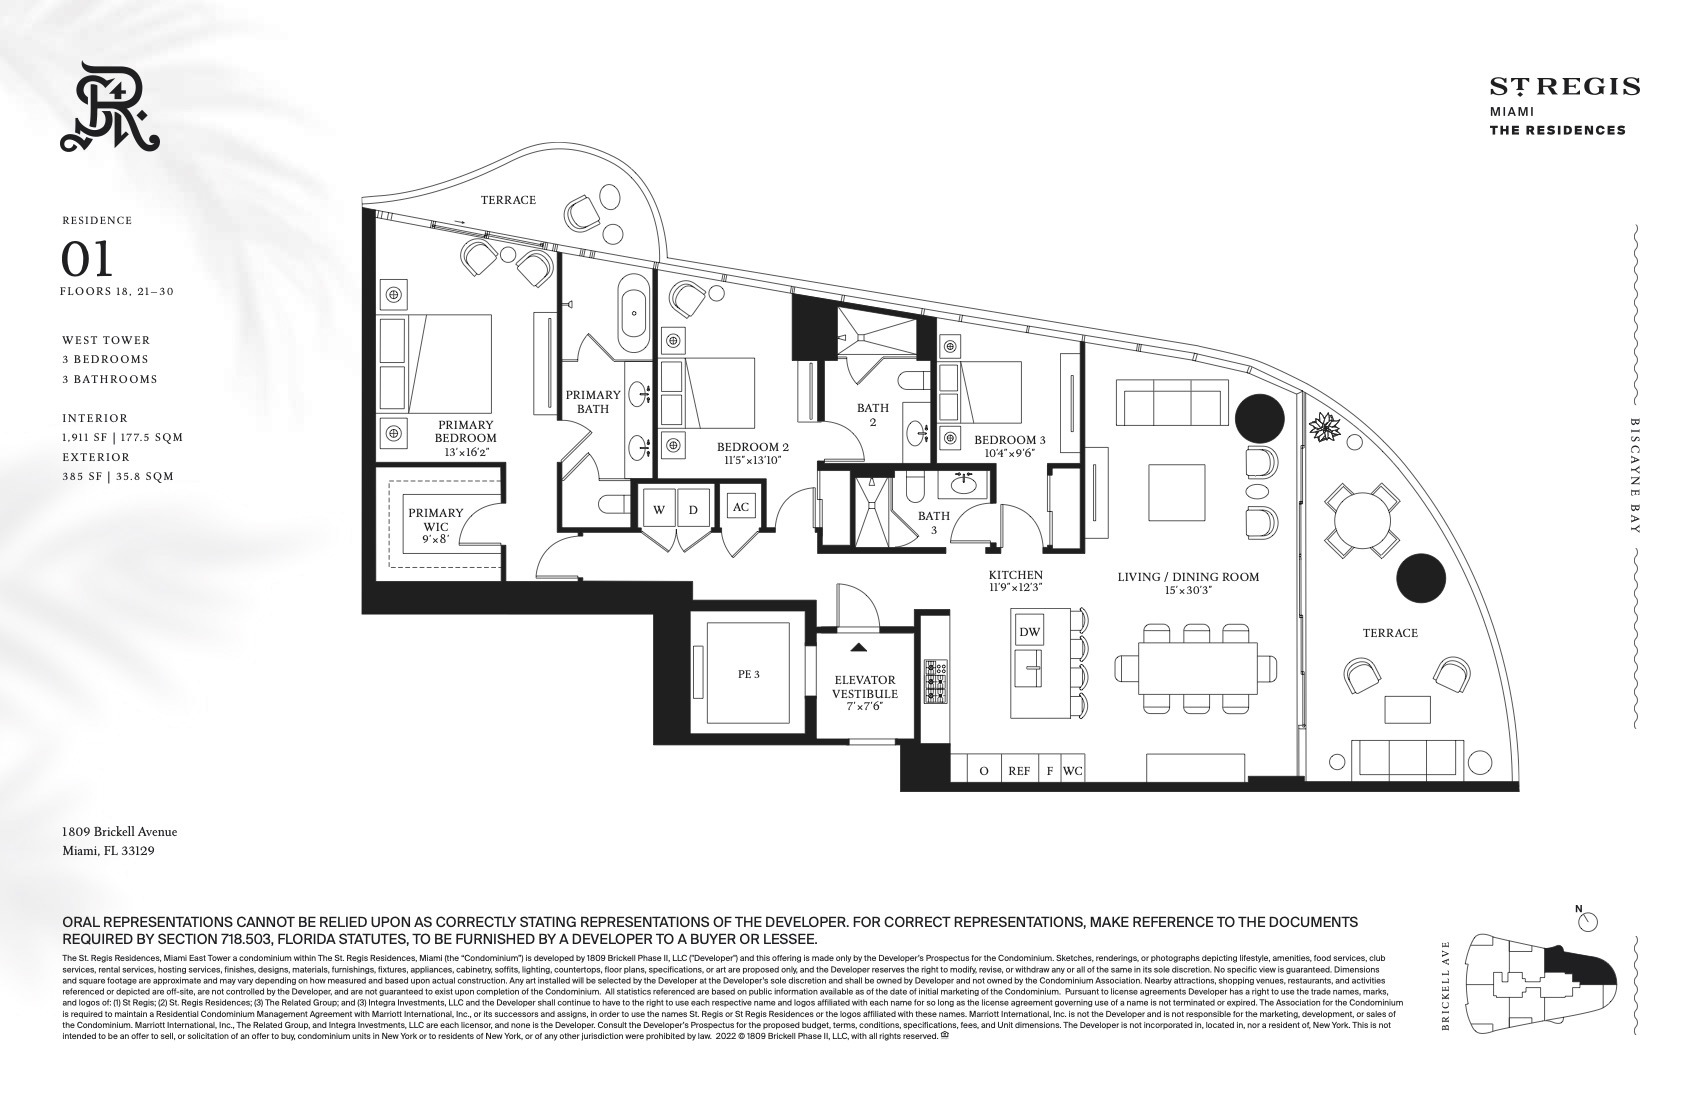 Floor Plan for St. Regis Brickell Floorplans, Residence 01 Floors 18, 21-30